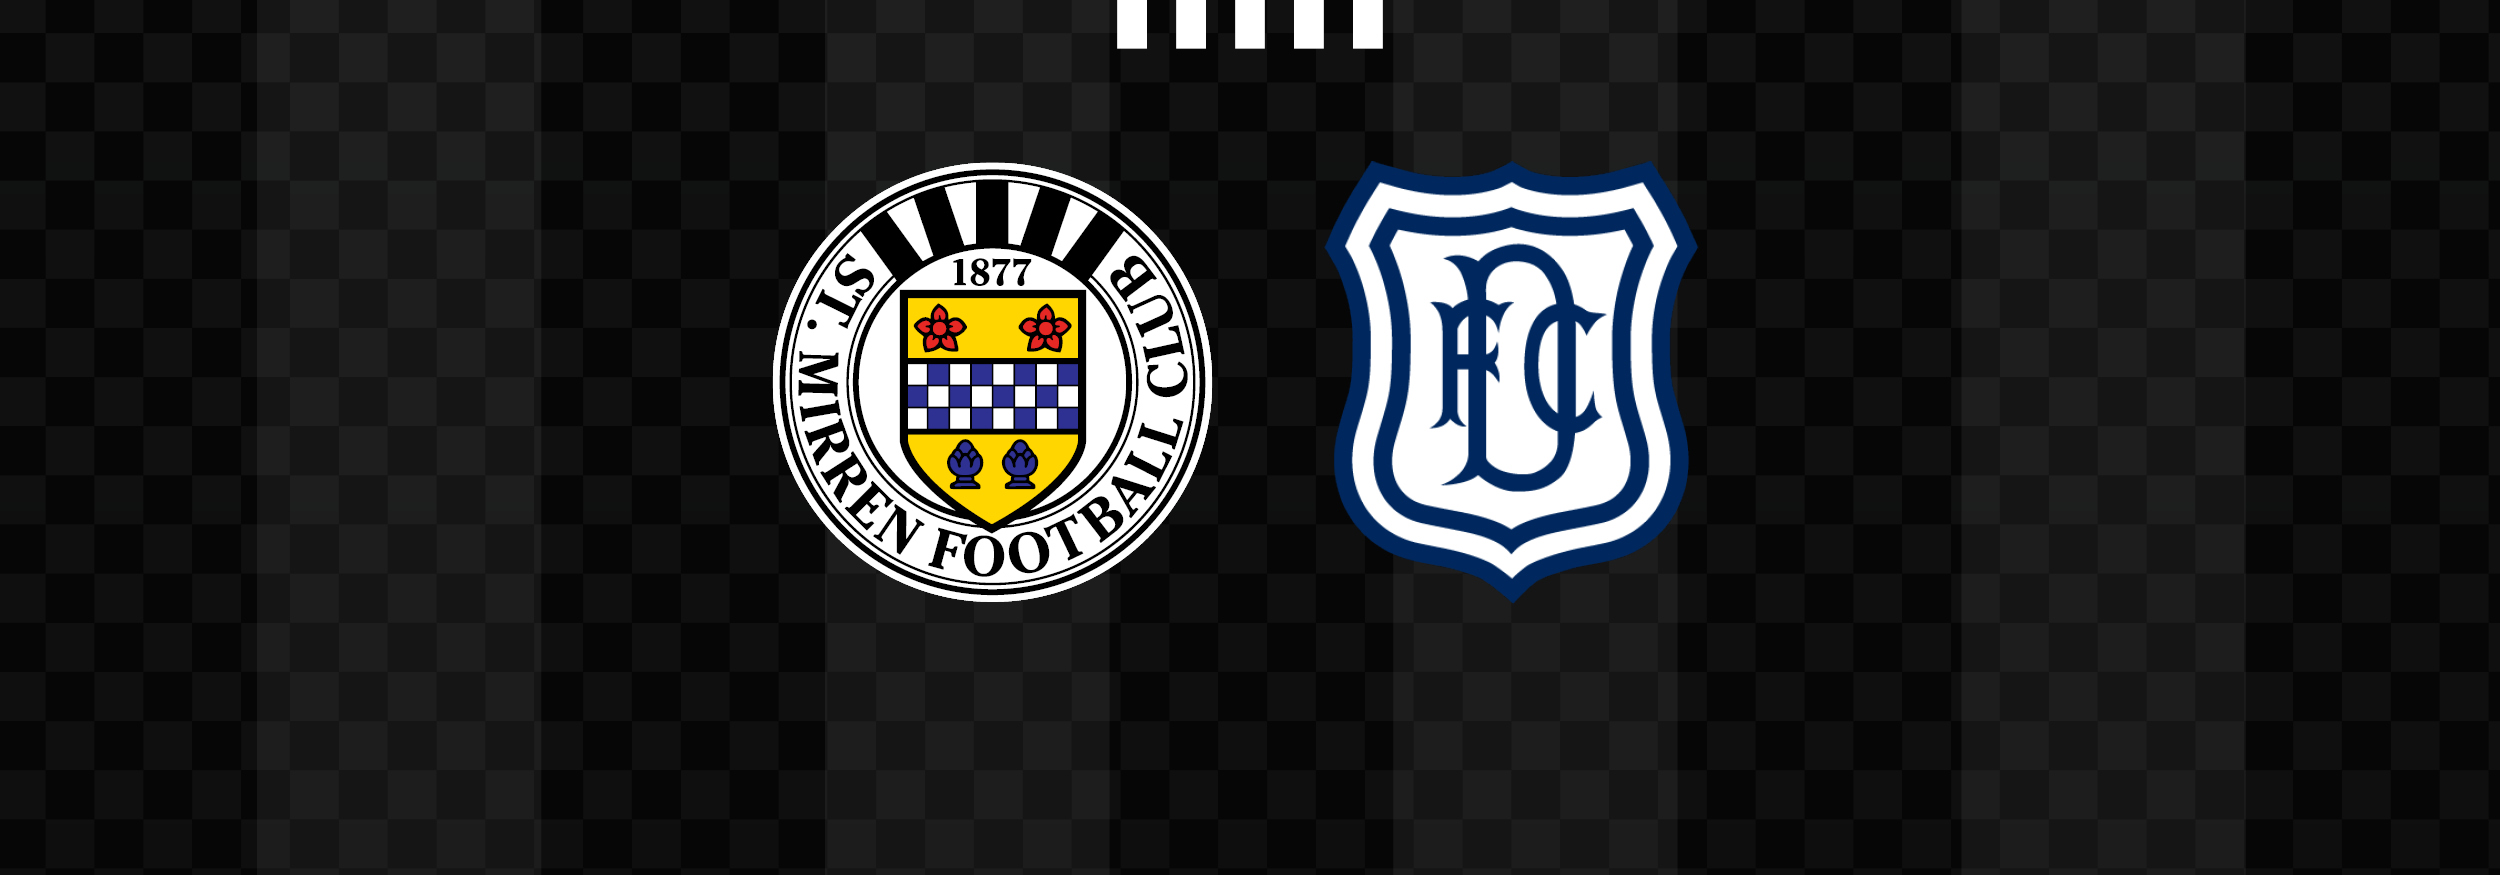 St Mirren v Dundee | Kick-off delayed